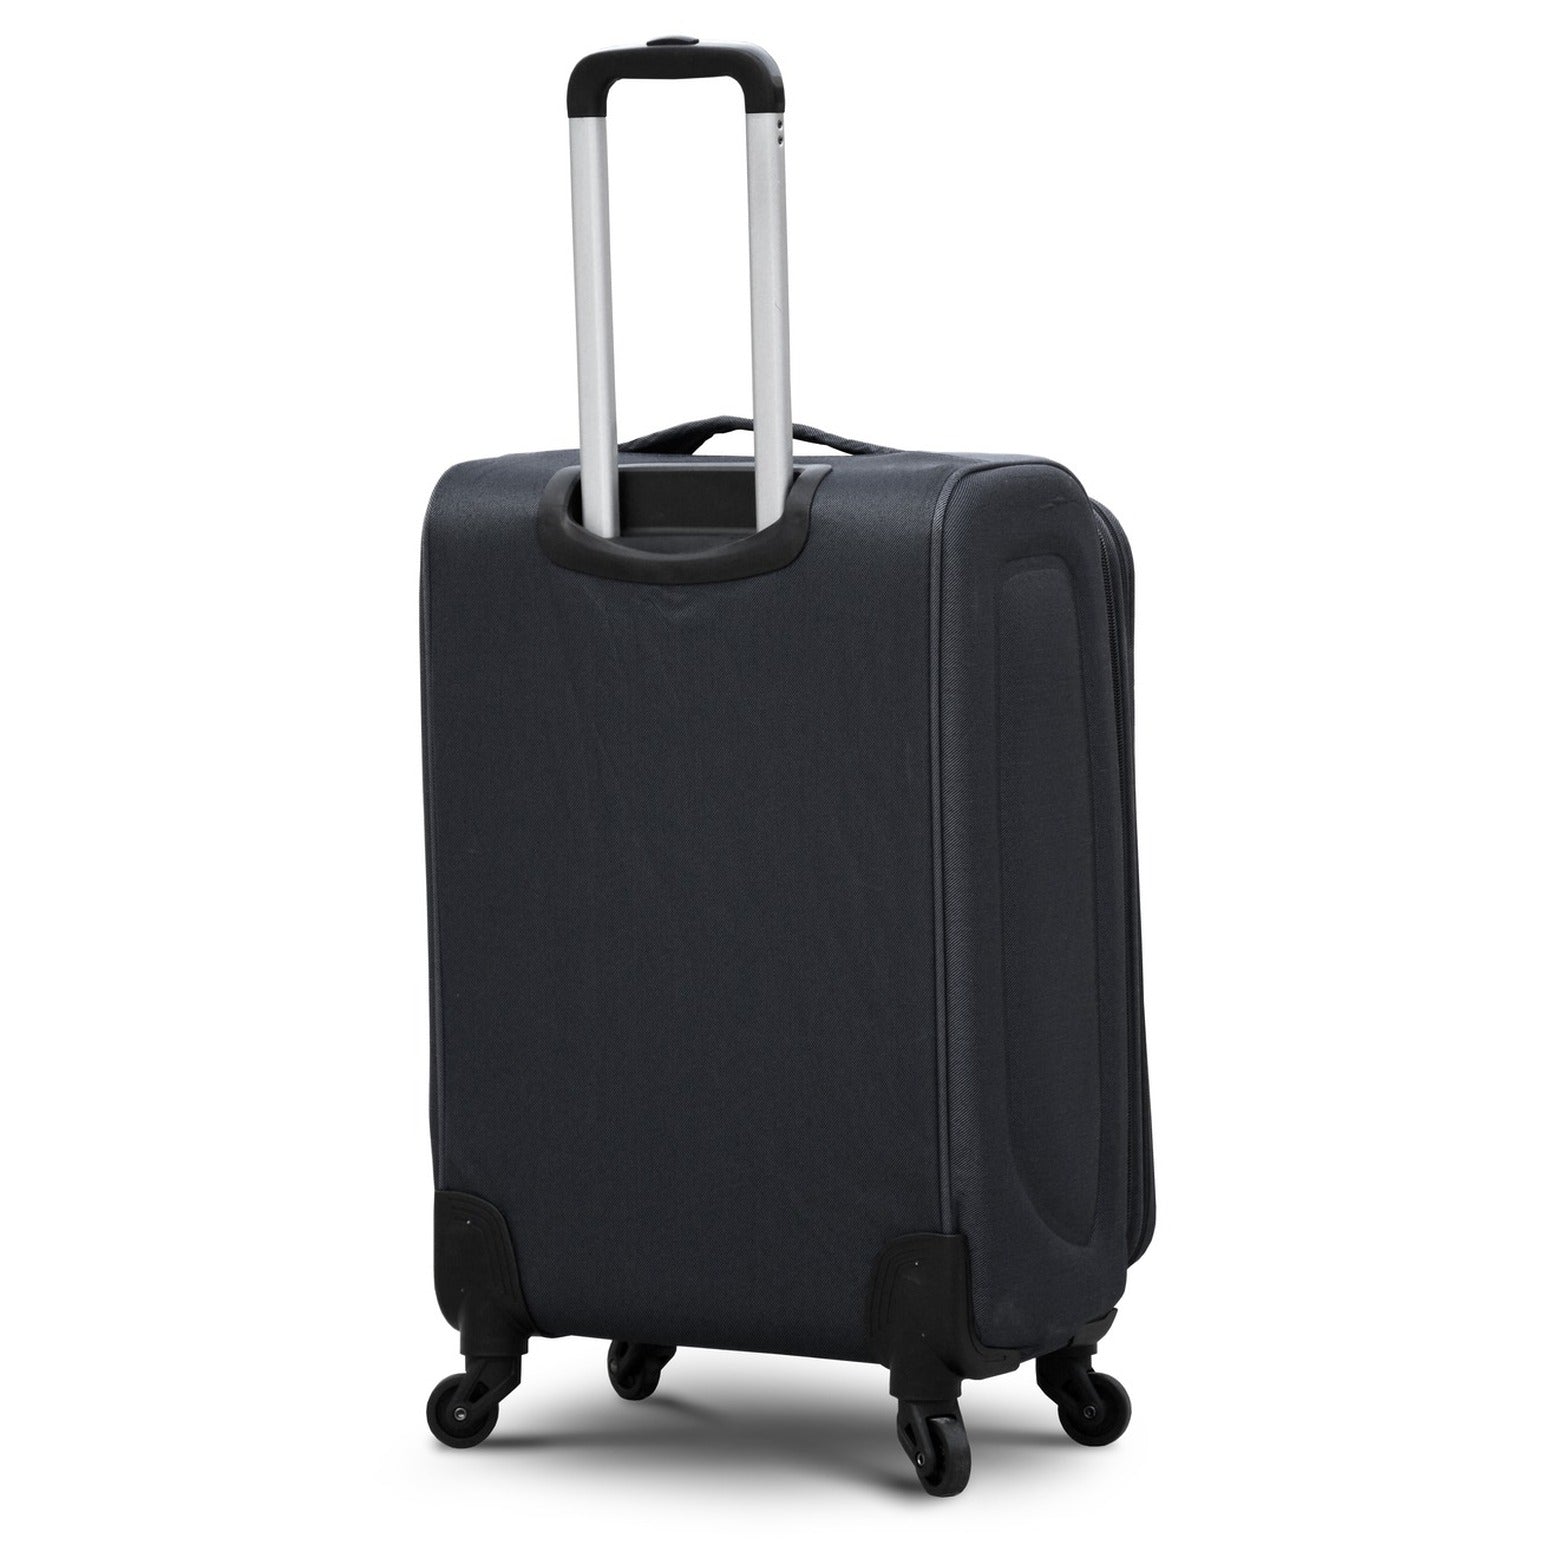 24" Black Colour SJ JIAN 4 Wheel Luggage Lightweight Soft Material Trolley Bag